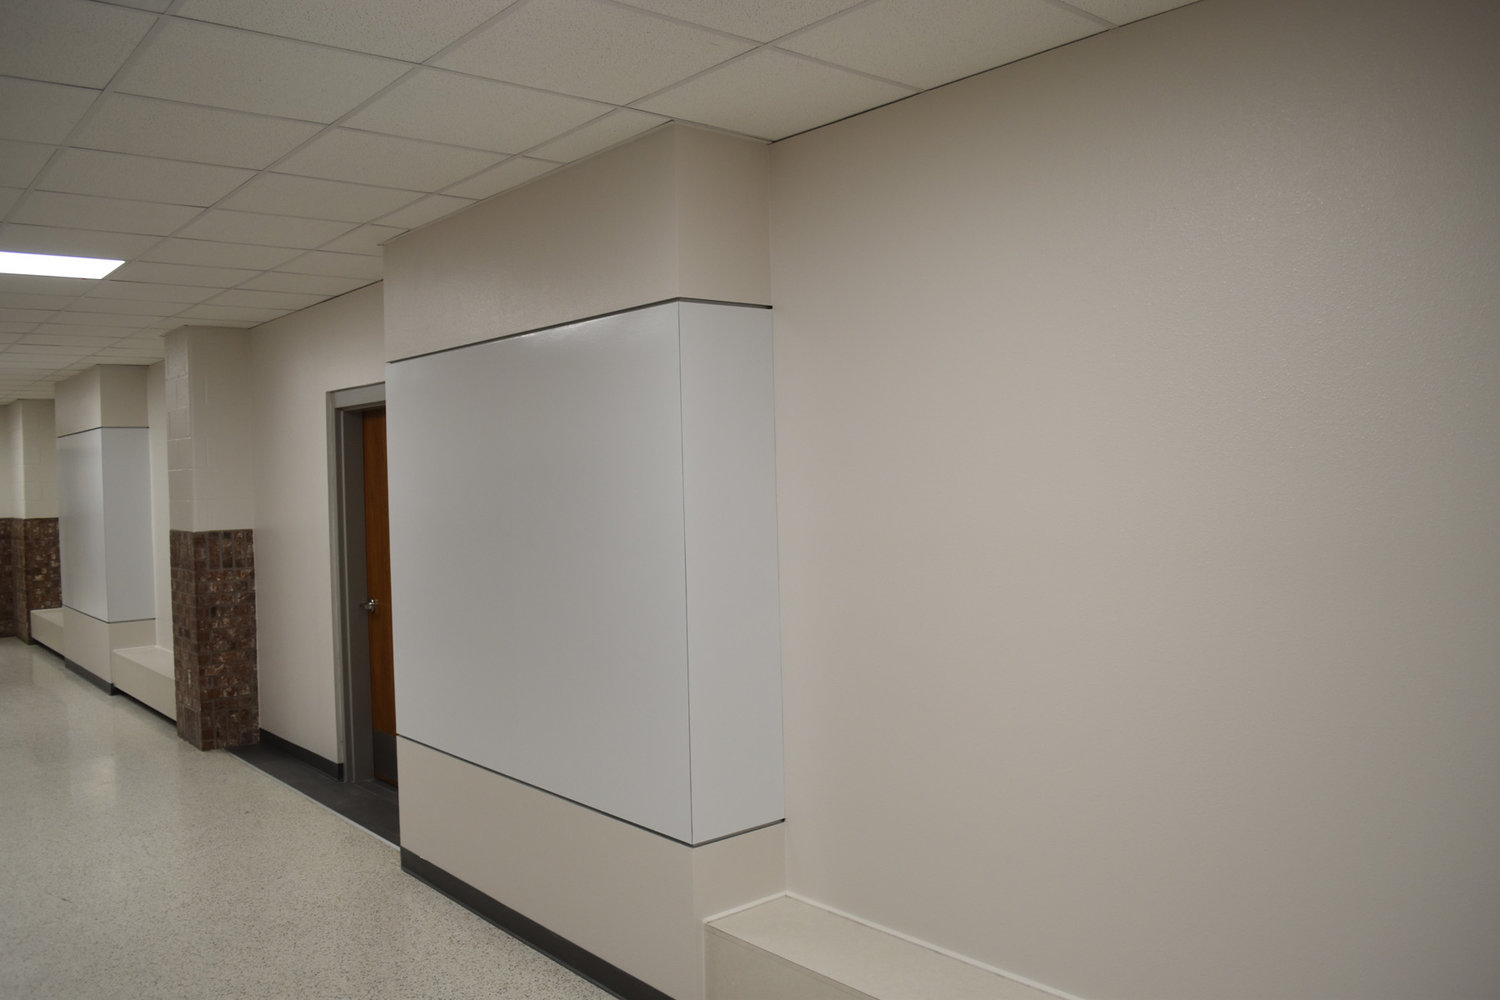 Whiteboard wall in one hallway